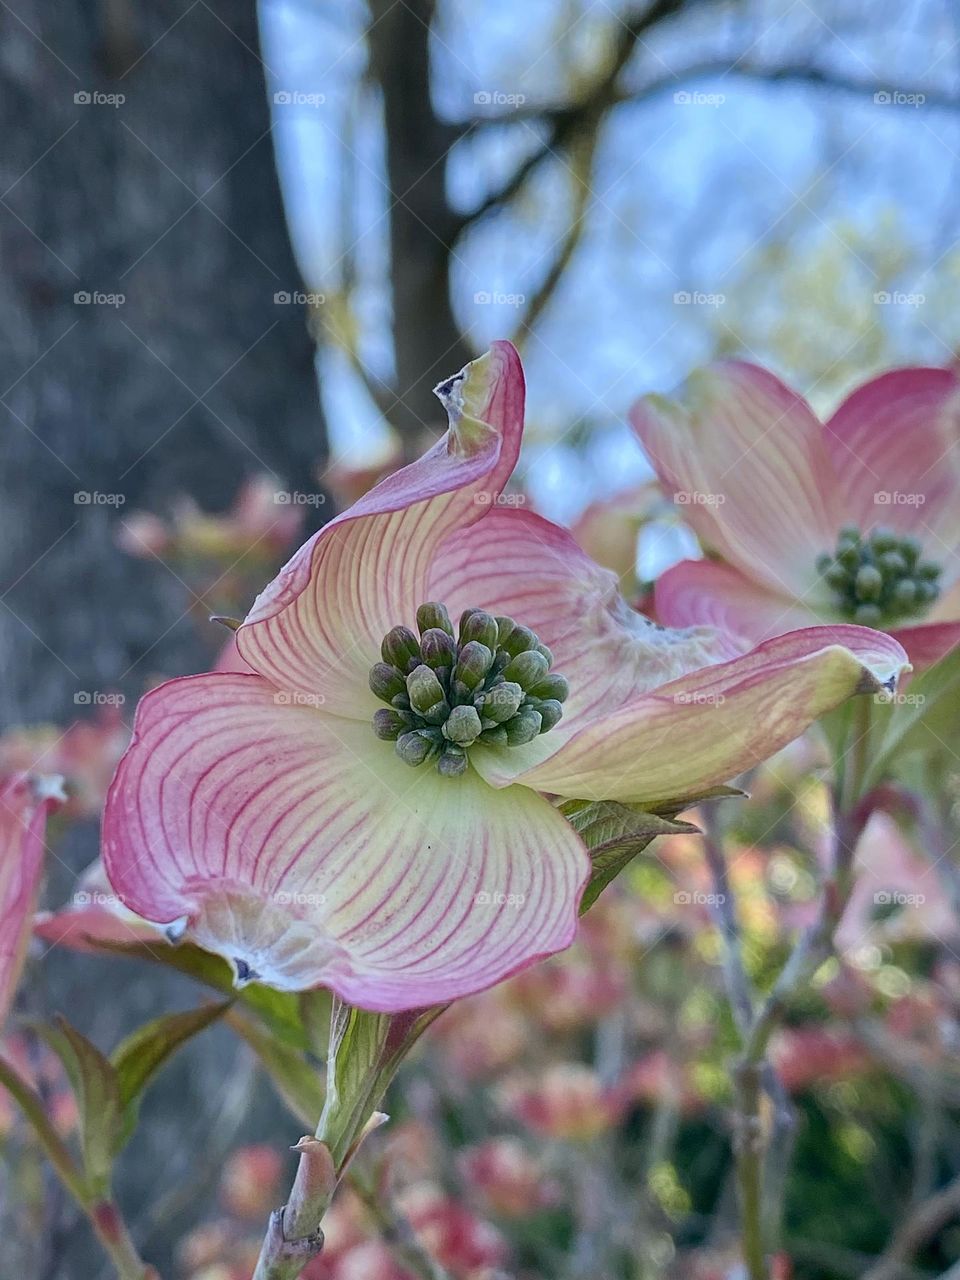 A pink dogwood blossom